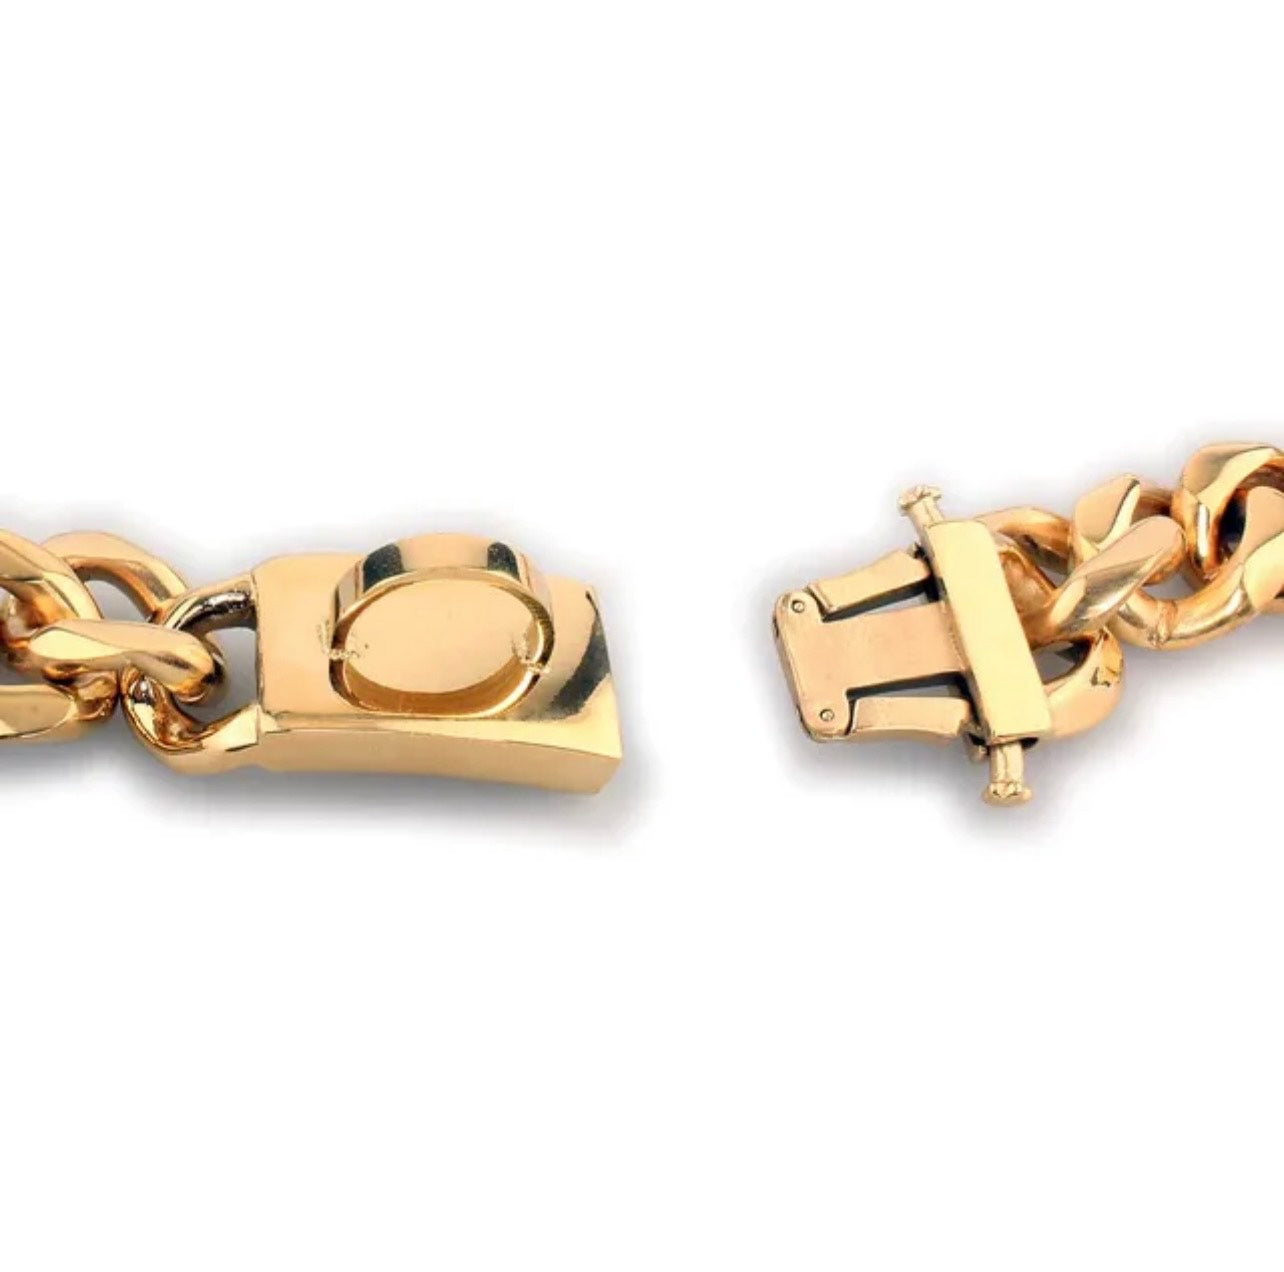 19MM luxury Gold Chain Collar